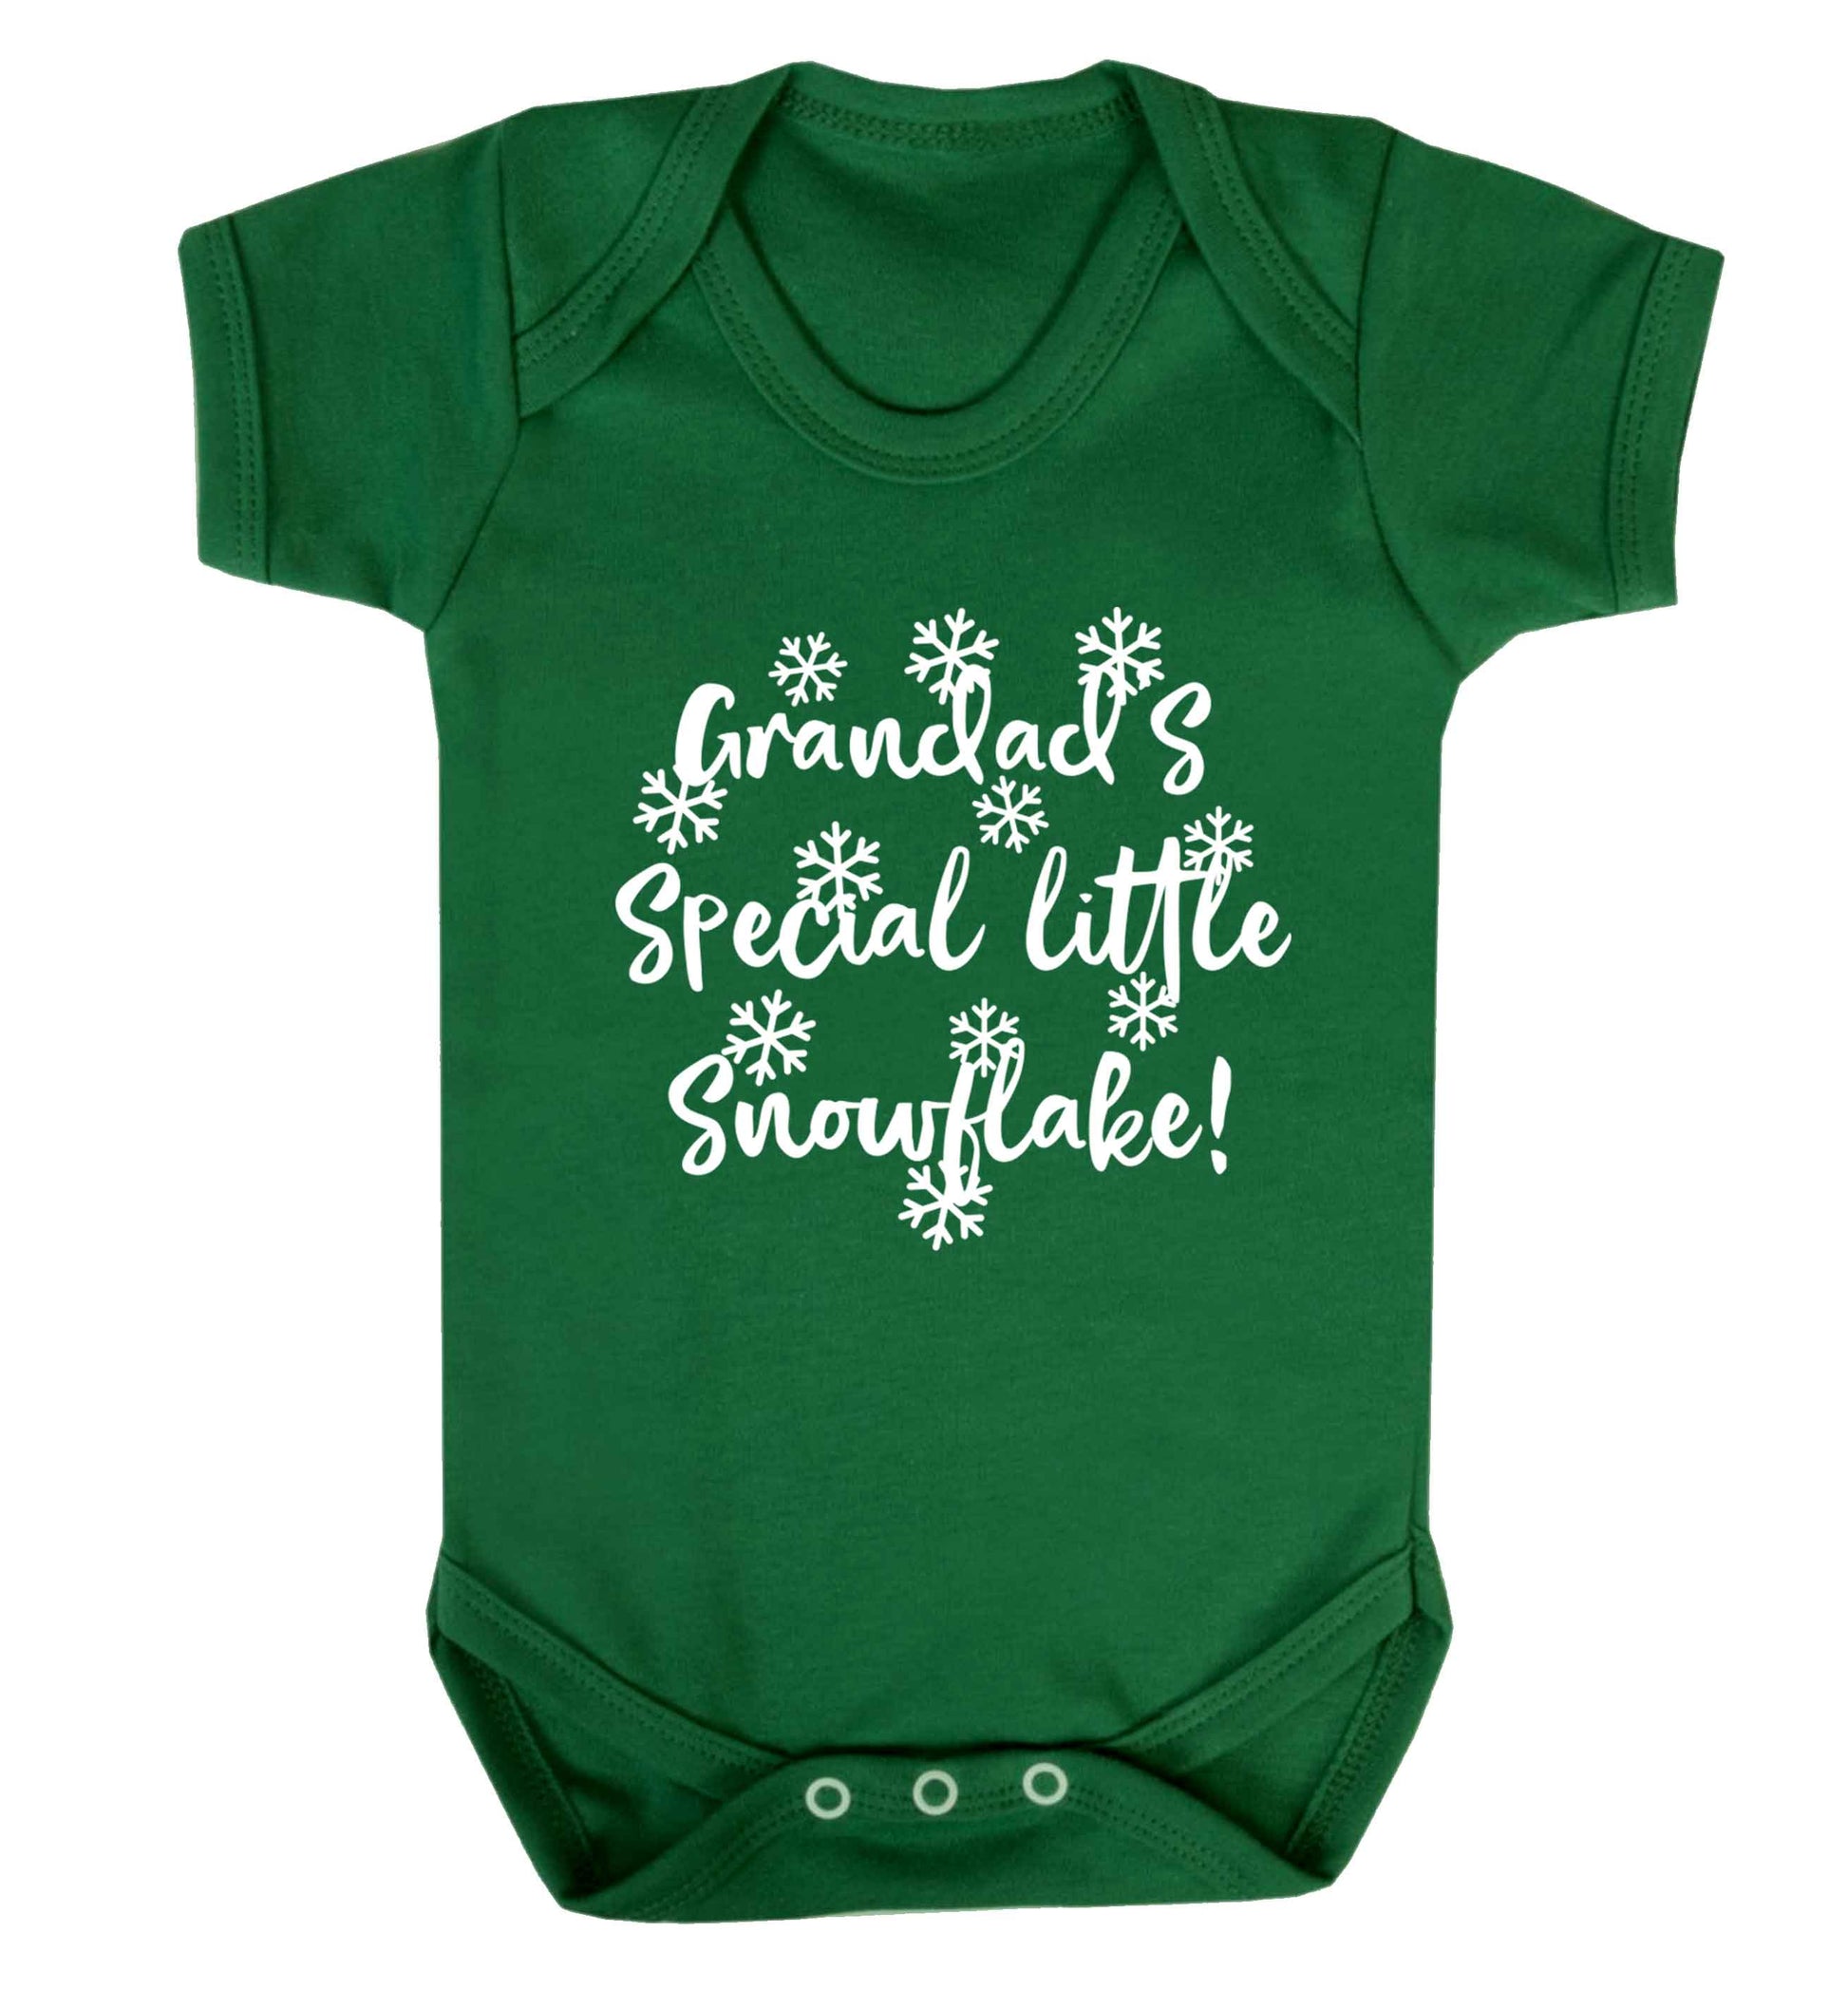 Grandad's special little snowflake Baby Vest green 18-24 months